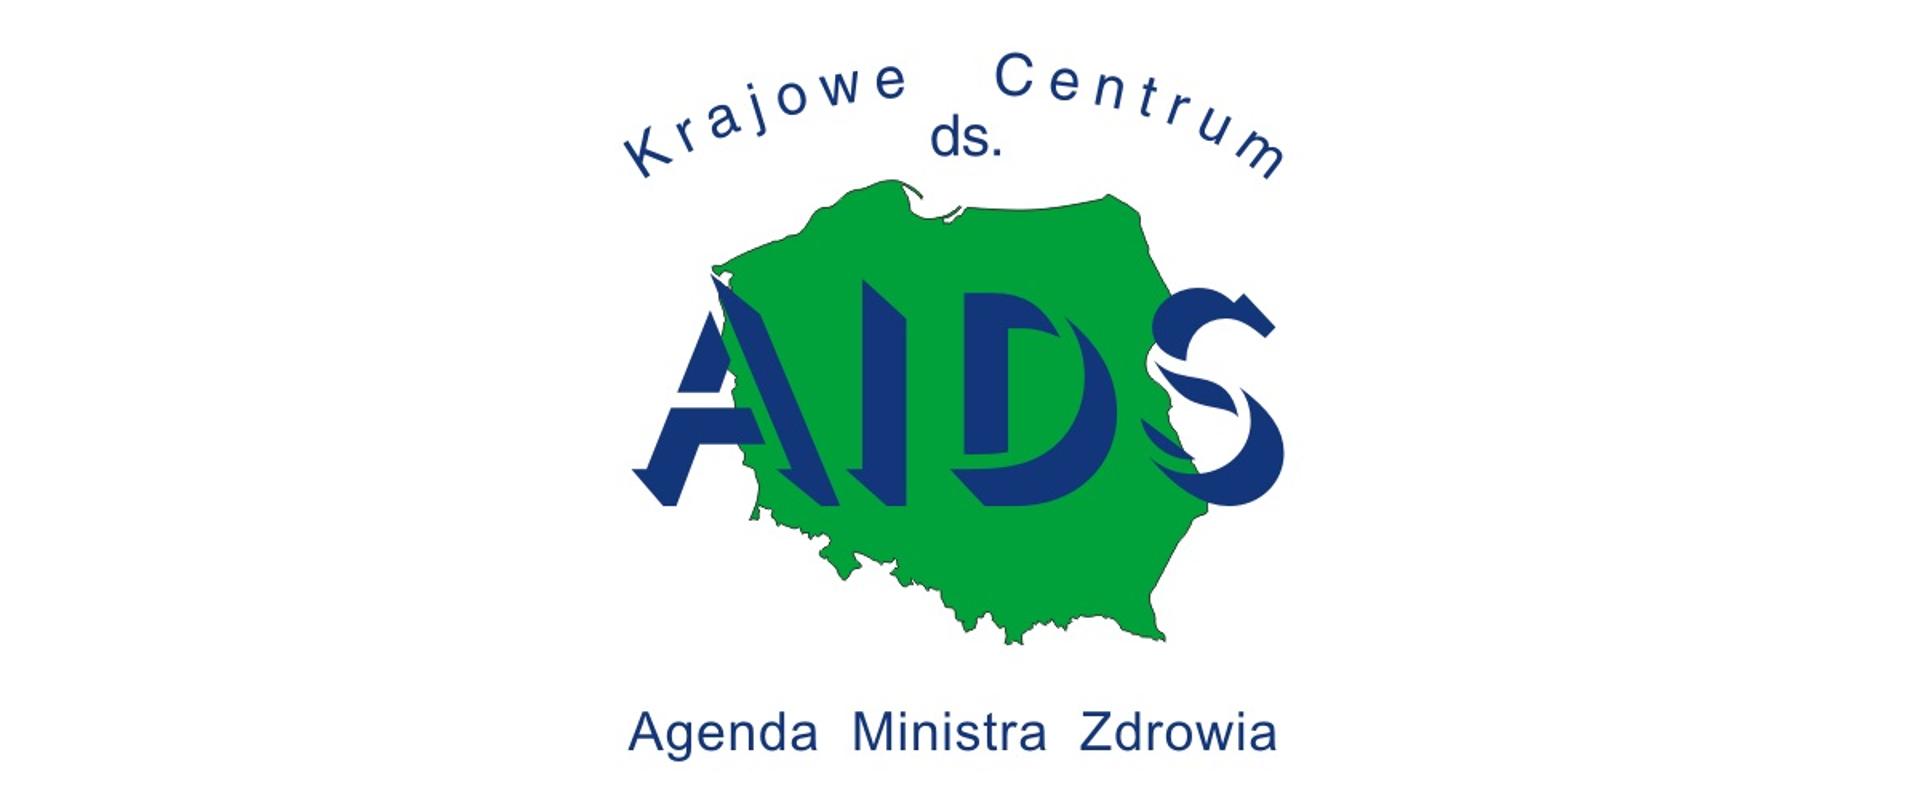 logo z napisem Krajowe Centrum ds. AIDS. Agenda Ministra Zdrowia na tle konturu granic Polski 